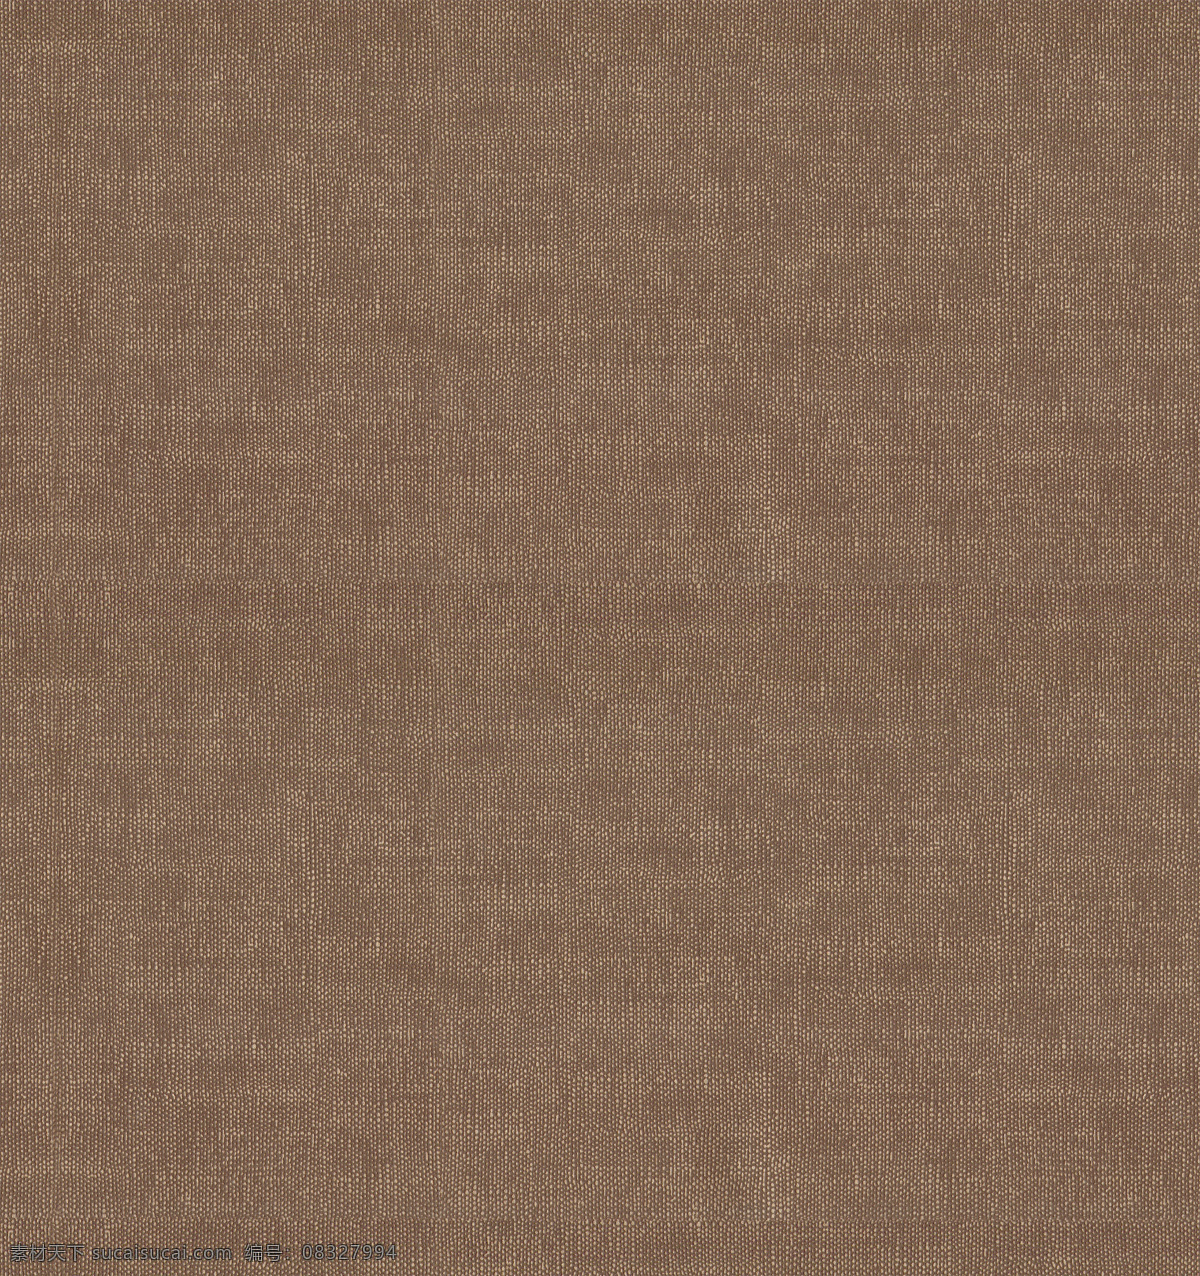 vray 布料 材质 有贴图 max2008 棕色 亚麻 灰色